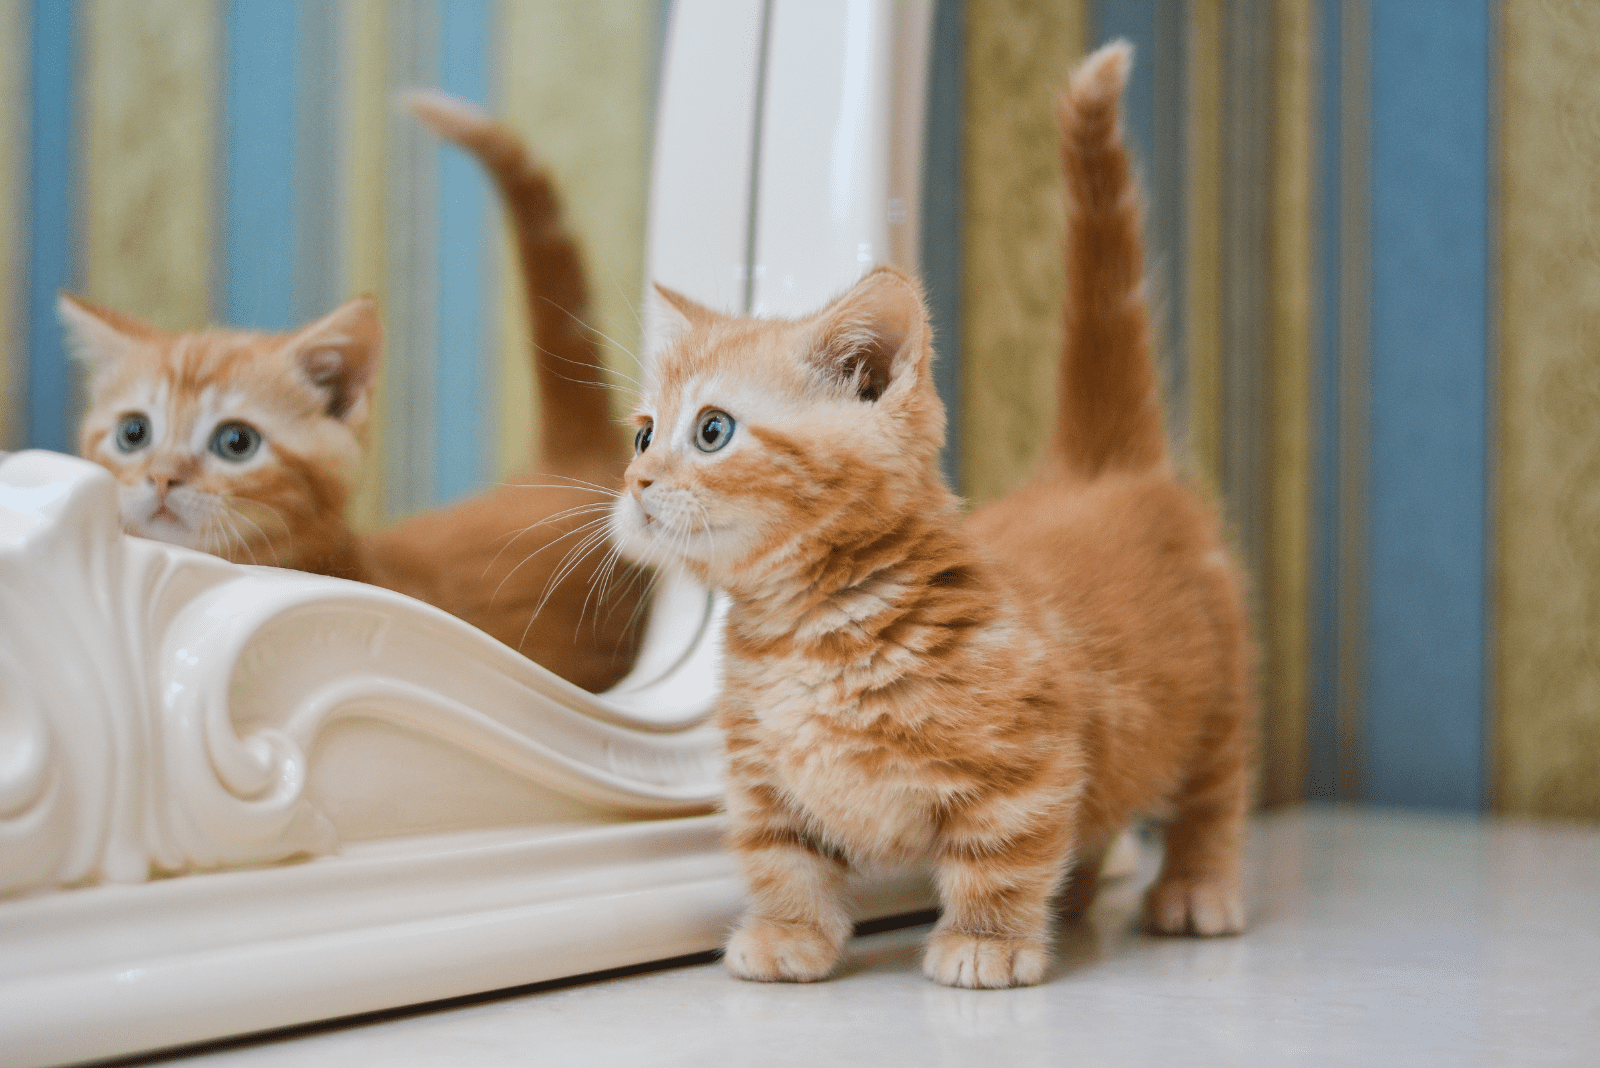 Munchkin Cat kitten is standing next to the mirror